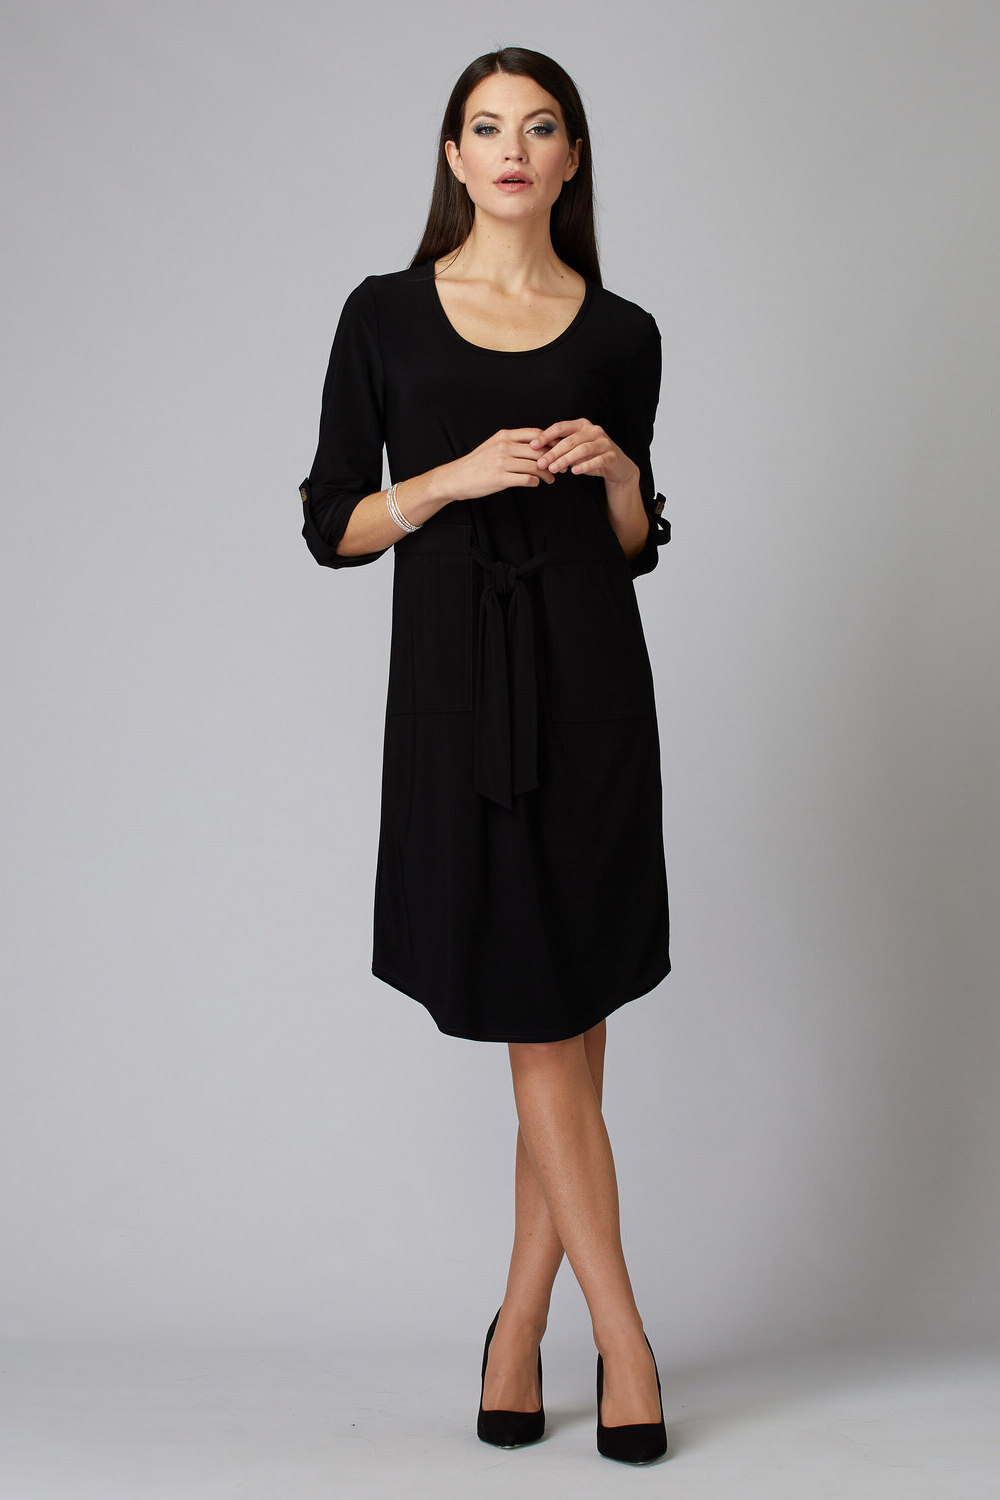 Joseph Ribkoff Dress Style 201274. Black